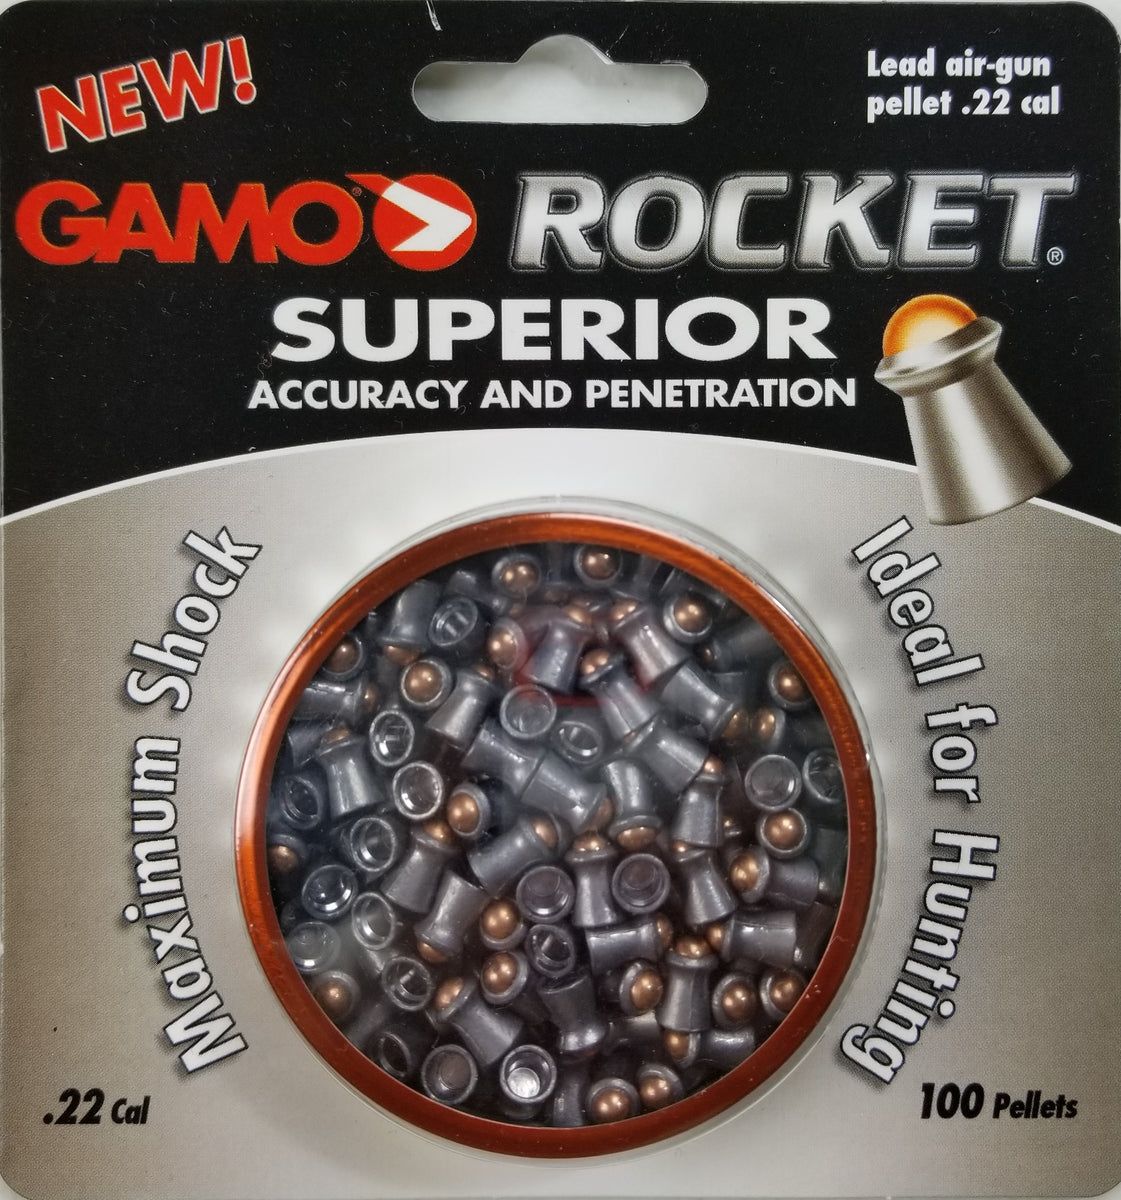 Gamo rocket pellet testing